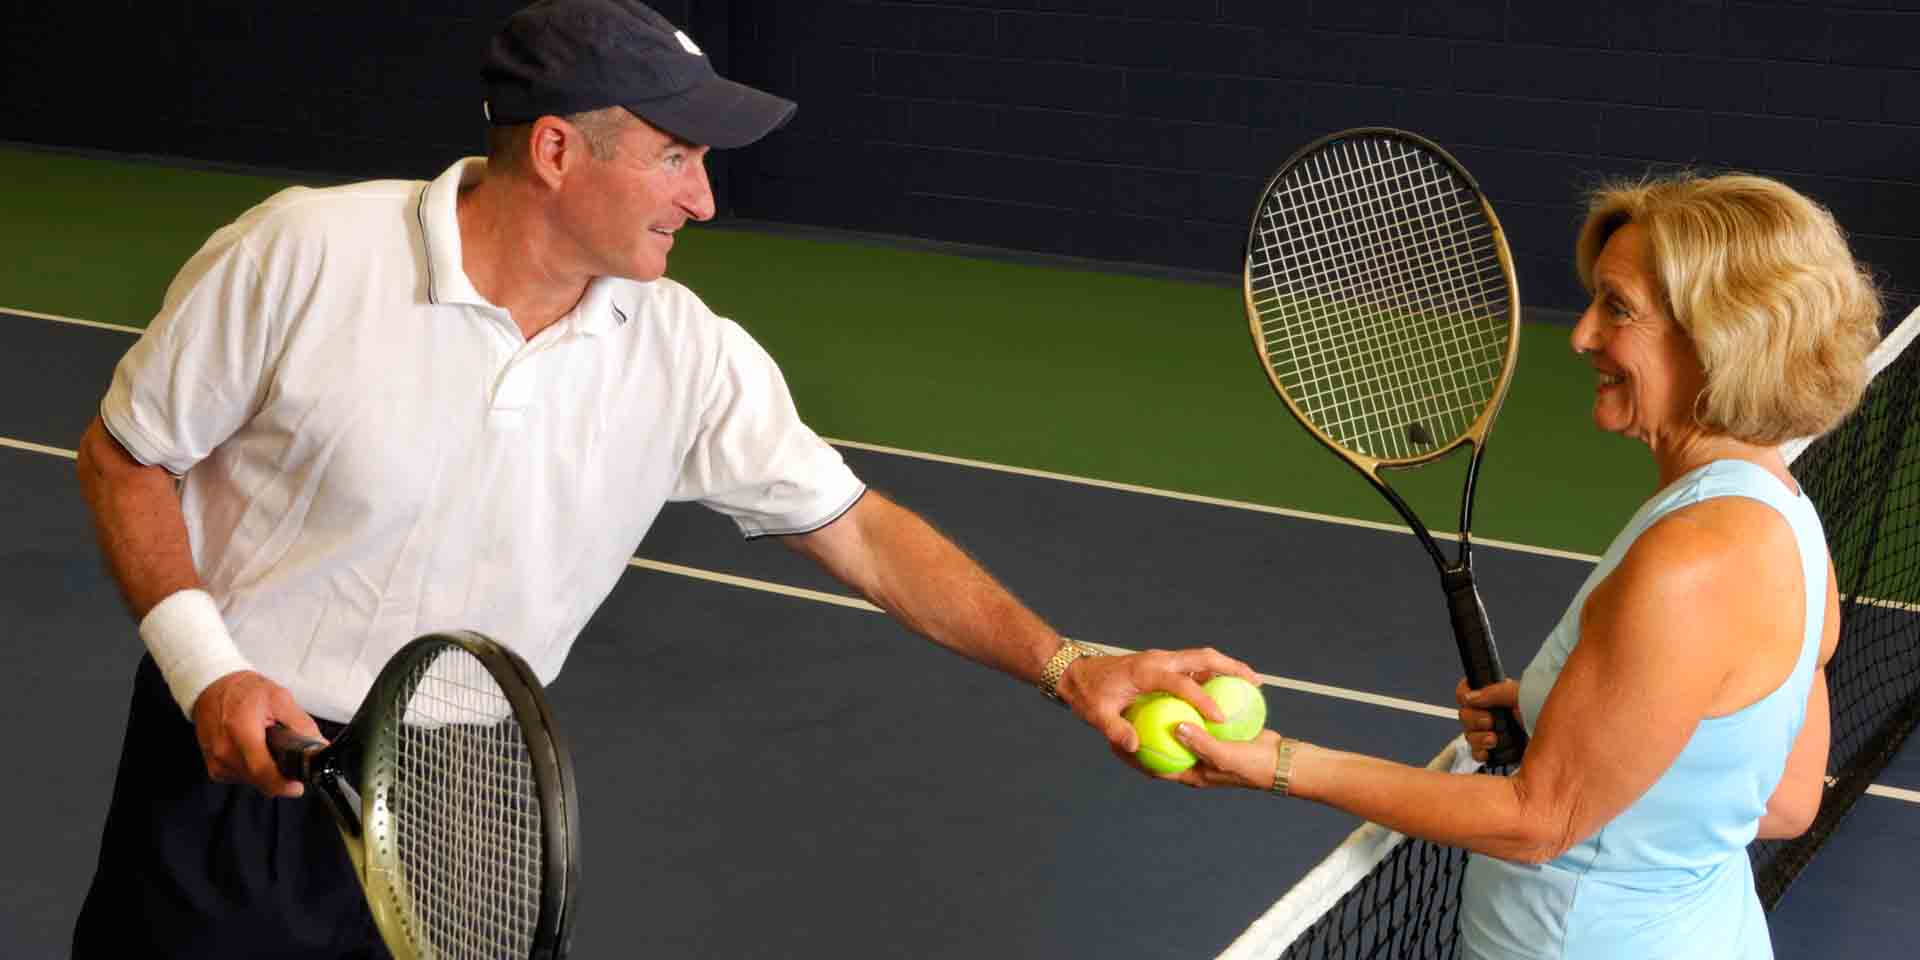 Man and woman holding tennis balls